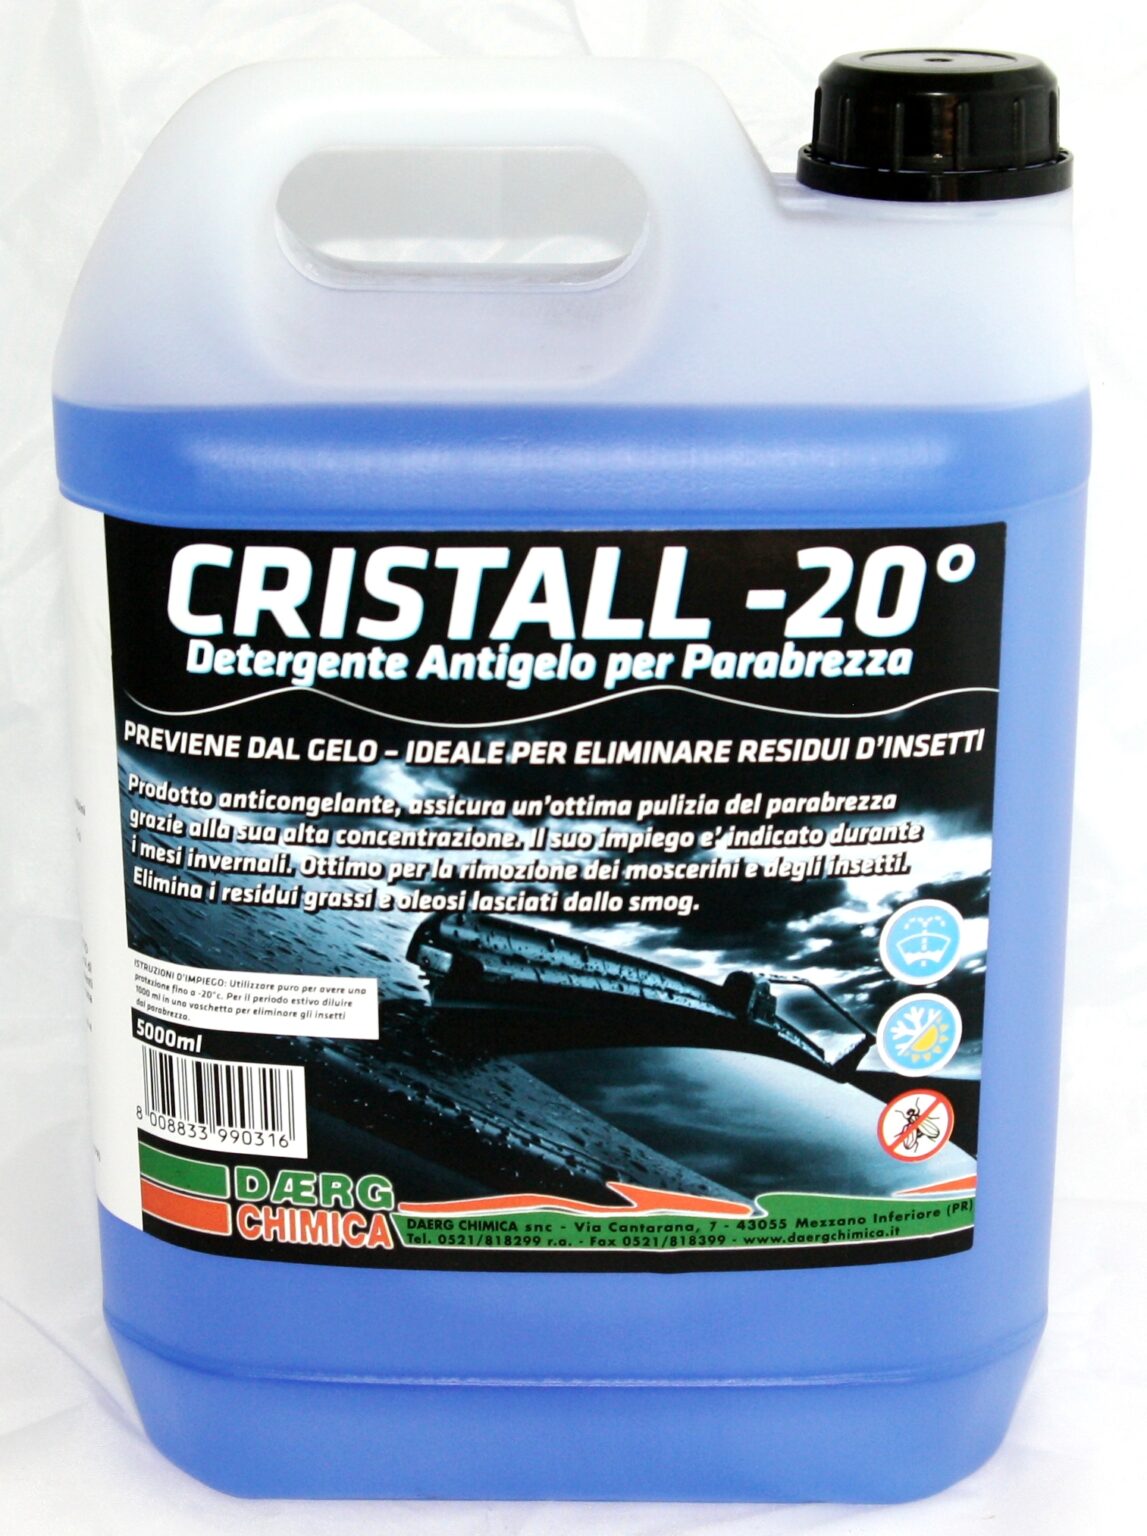 cristall-20-detergente-antigelo